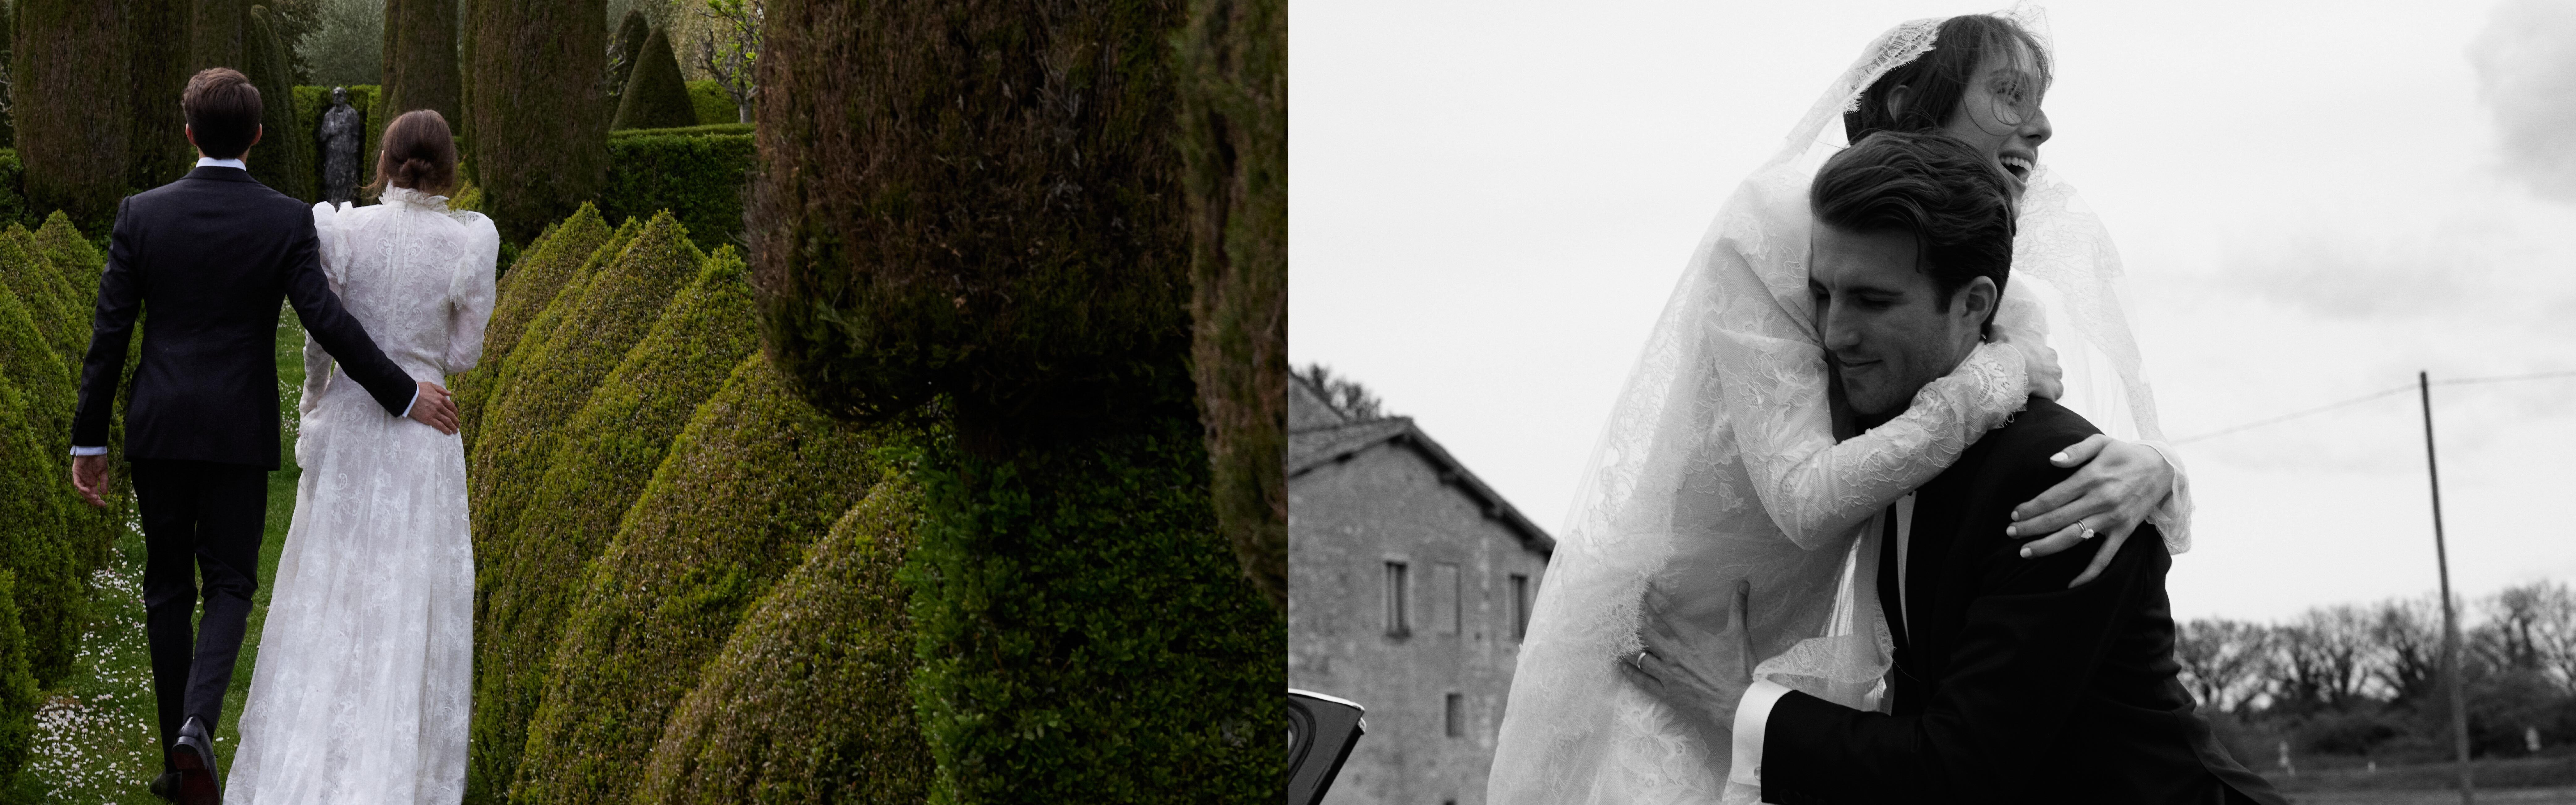 A Tuscan Villa and Custom Zac Posen Dress Set the Scene for This Idyllic Wedding